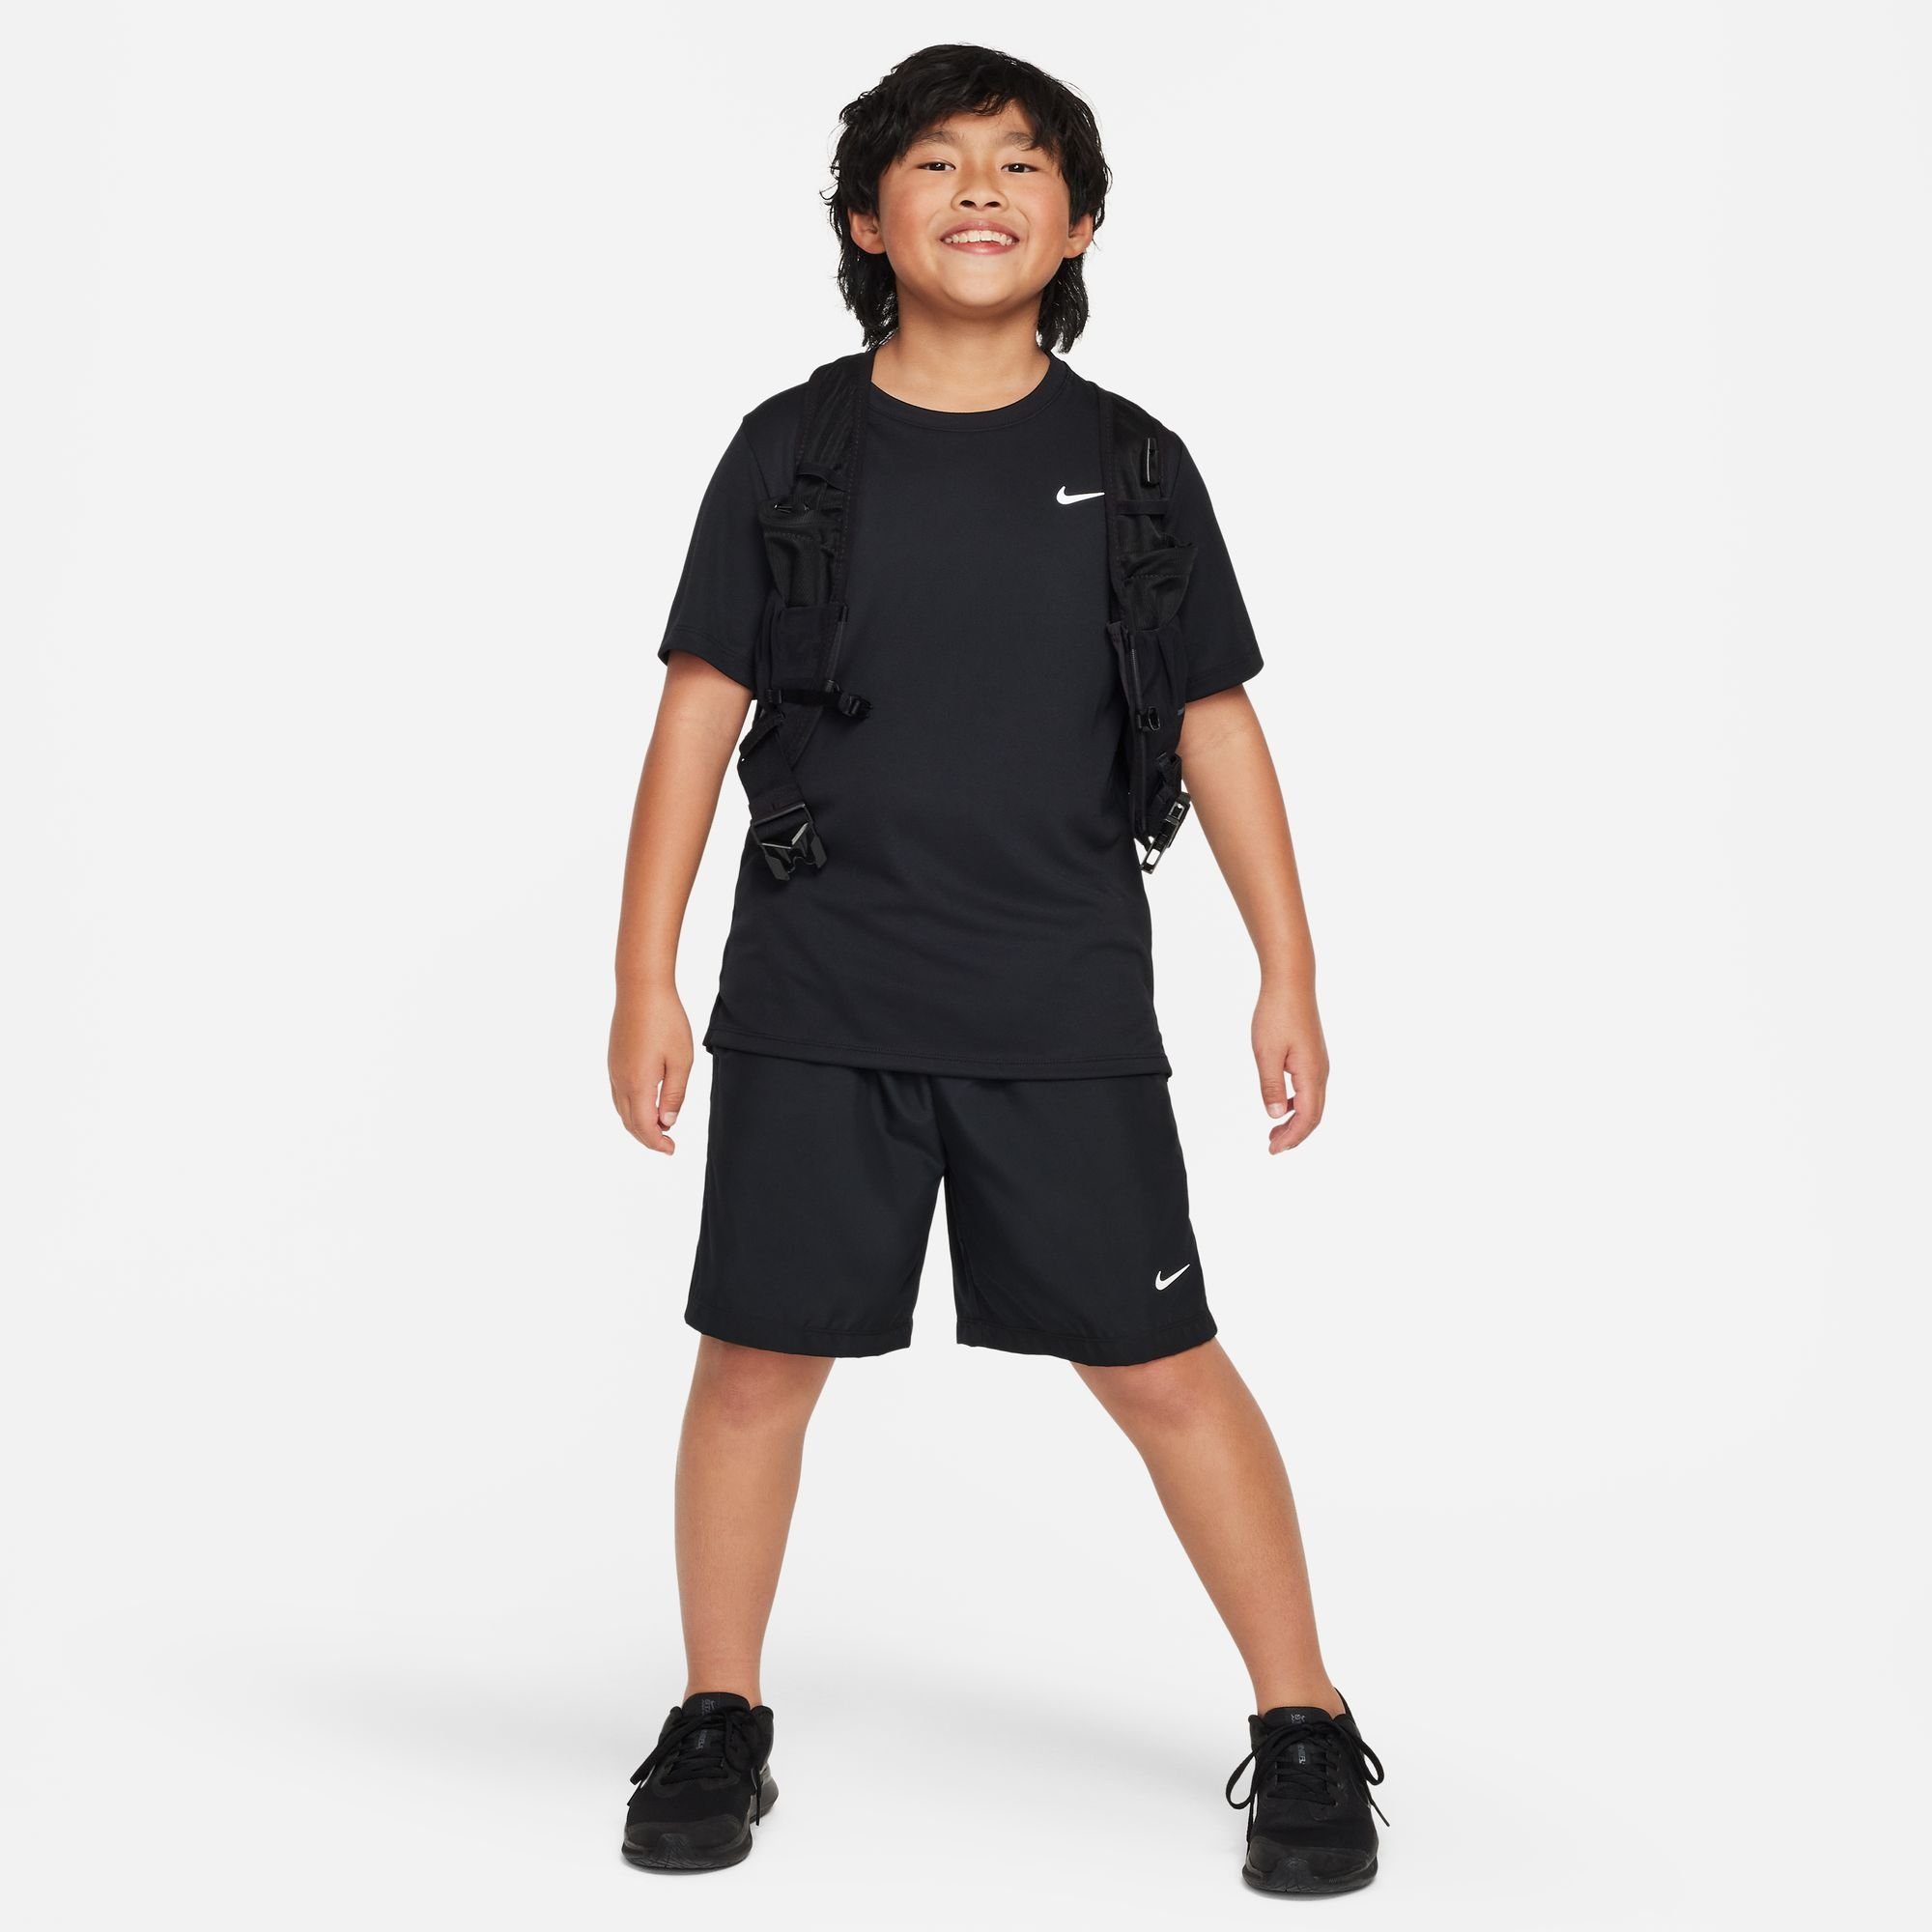 SILV KIDS' TOP Nike (BOYS) TRAINING DRI-FIT BIG BLACK/REFLECTIVE Trainingsshirt MILER SHORT-SLEEVE